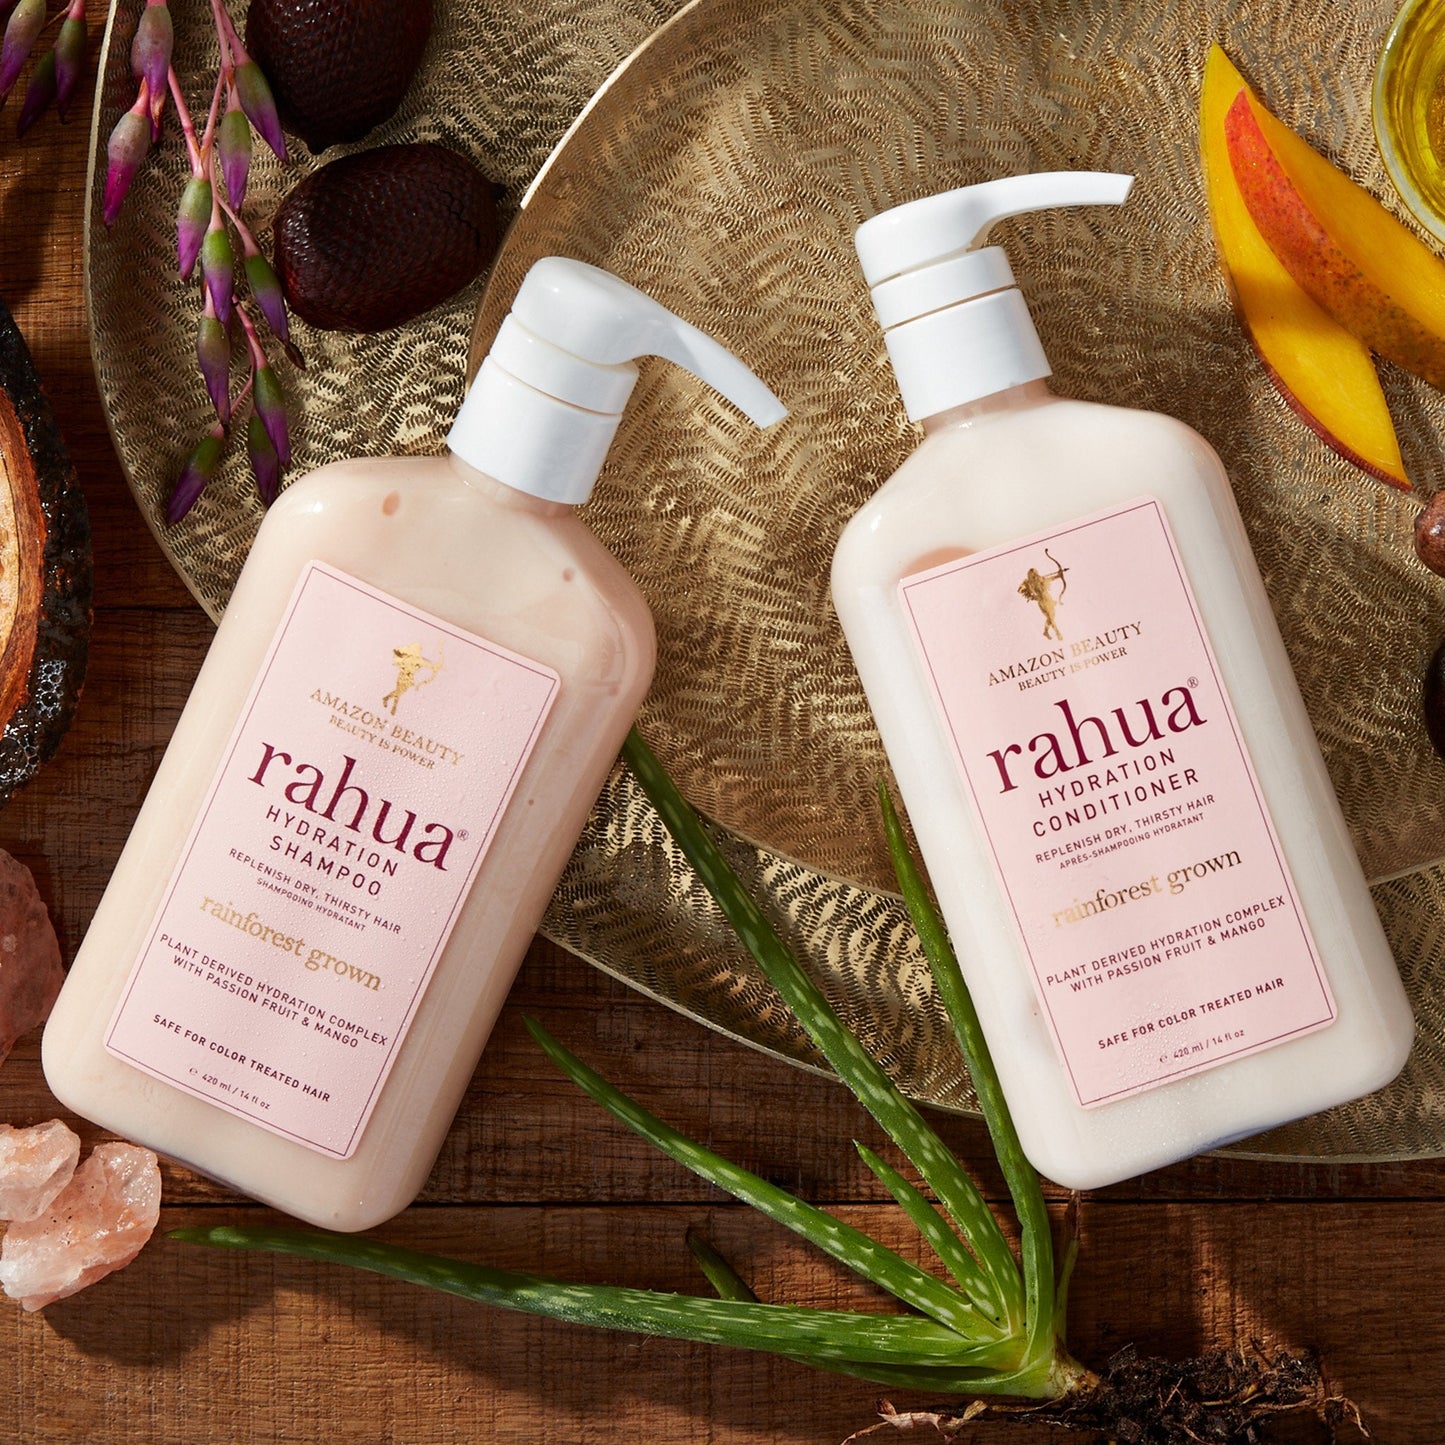 rahua hydration shampoo and conditioner lush pumps with aloe vera